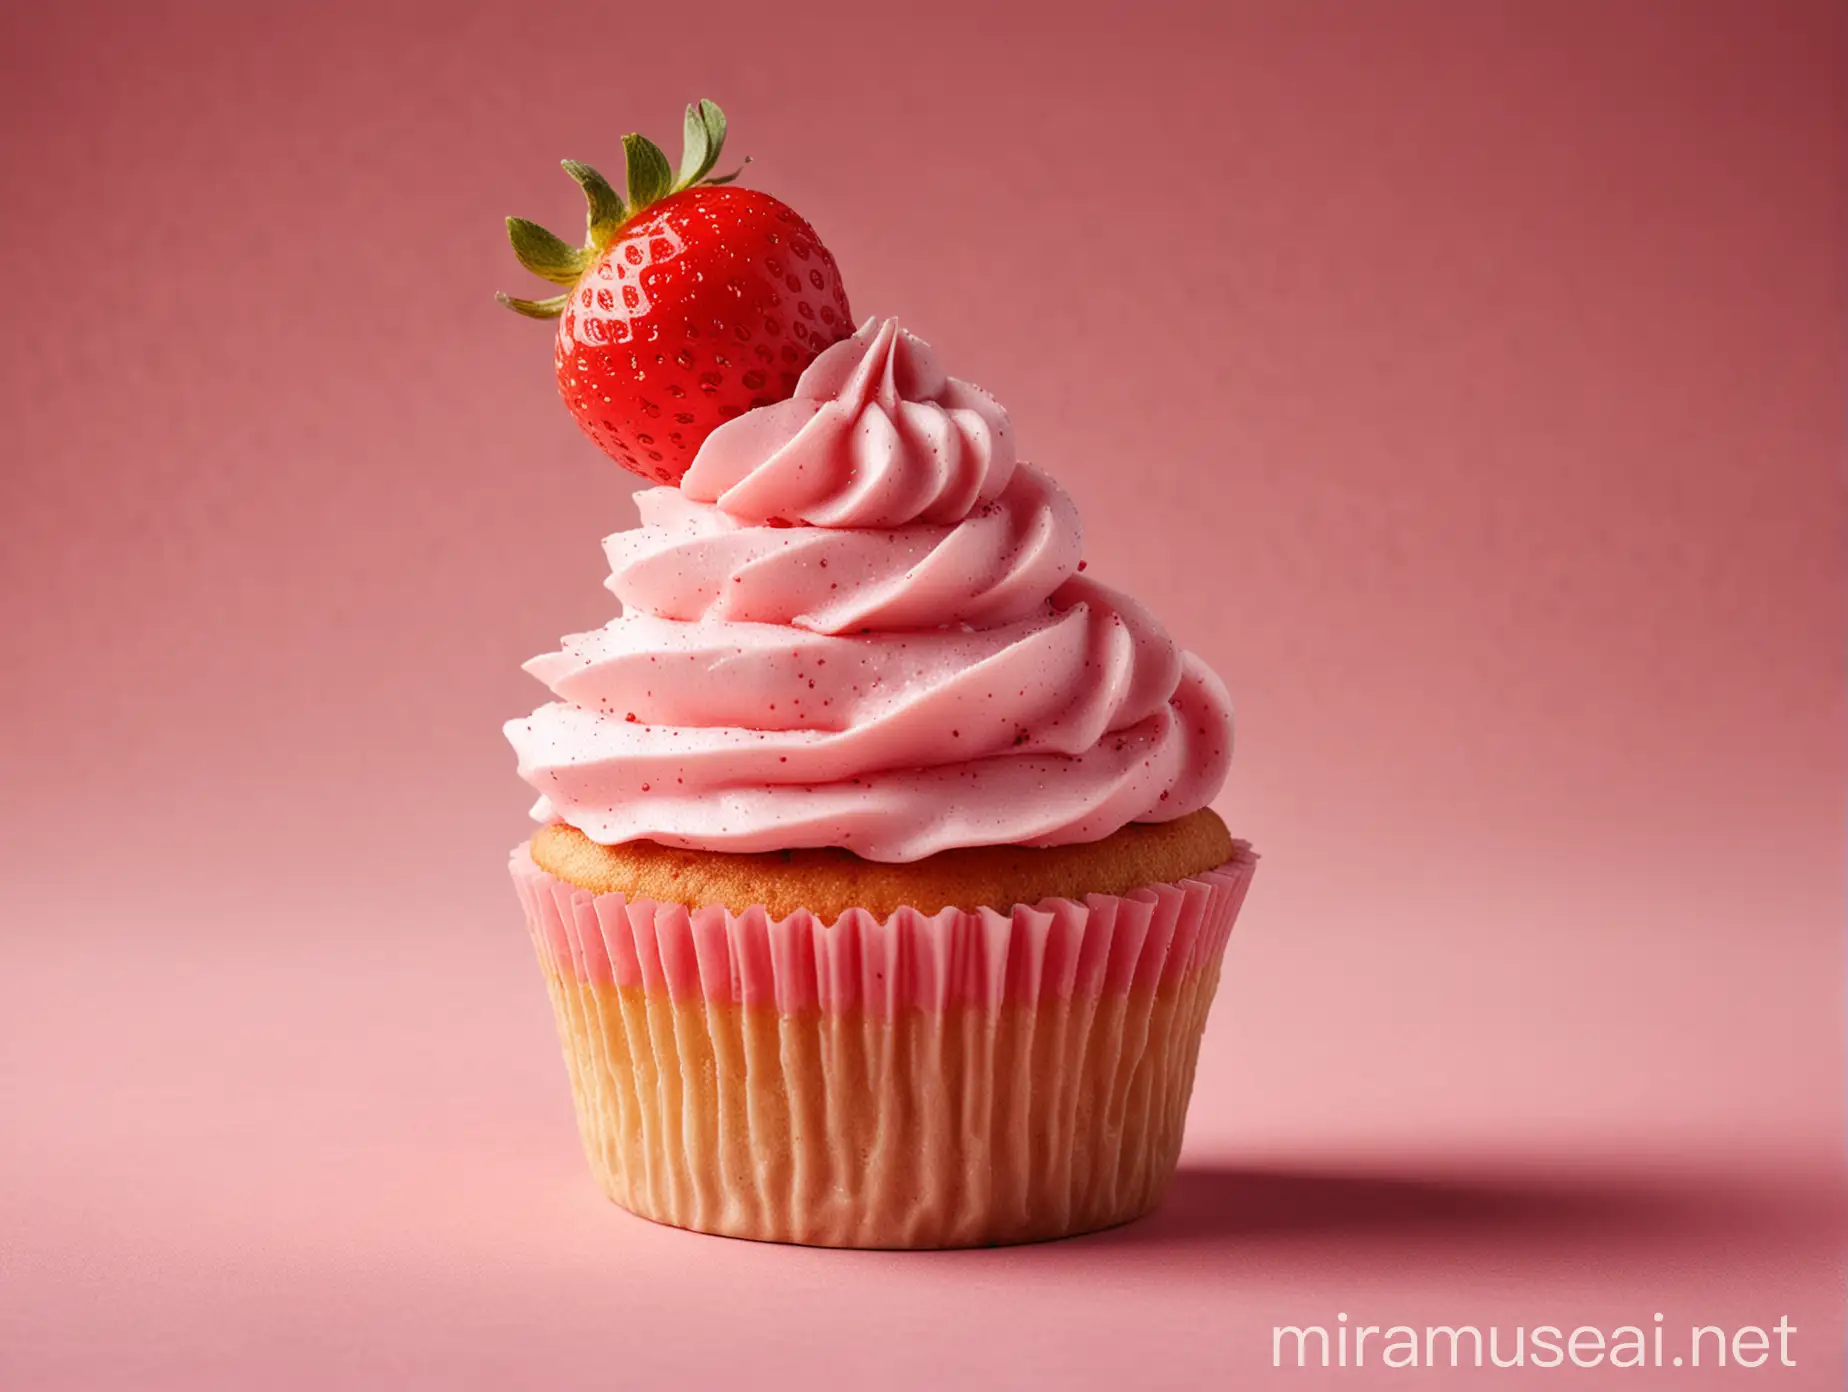 Symmetrical Strawberry Cupcake on Isolated Background